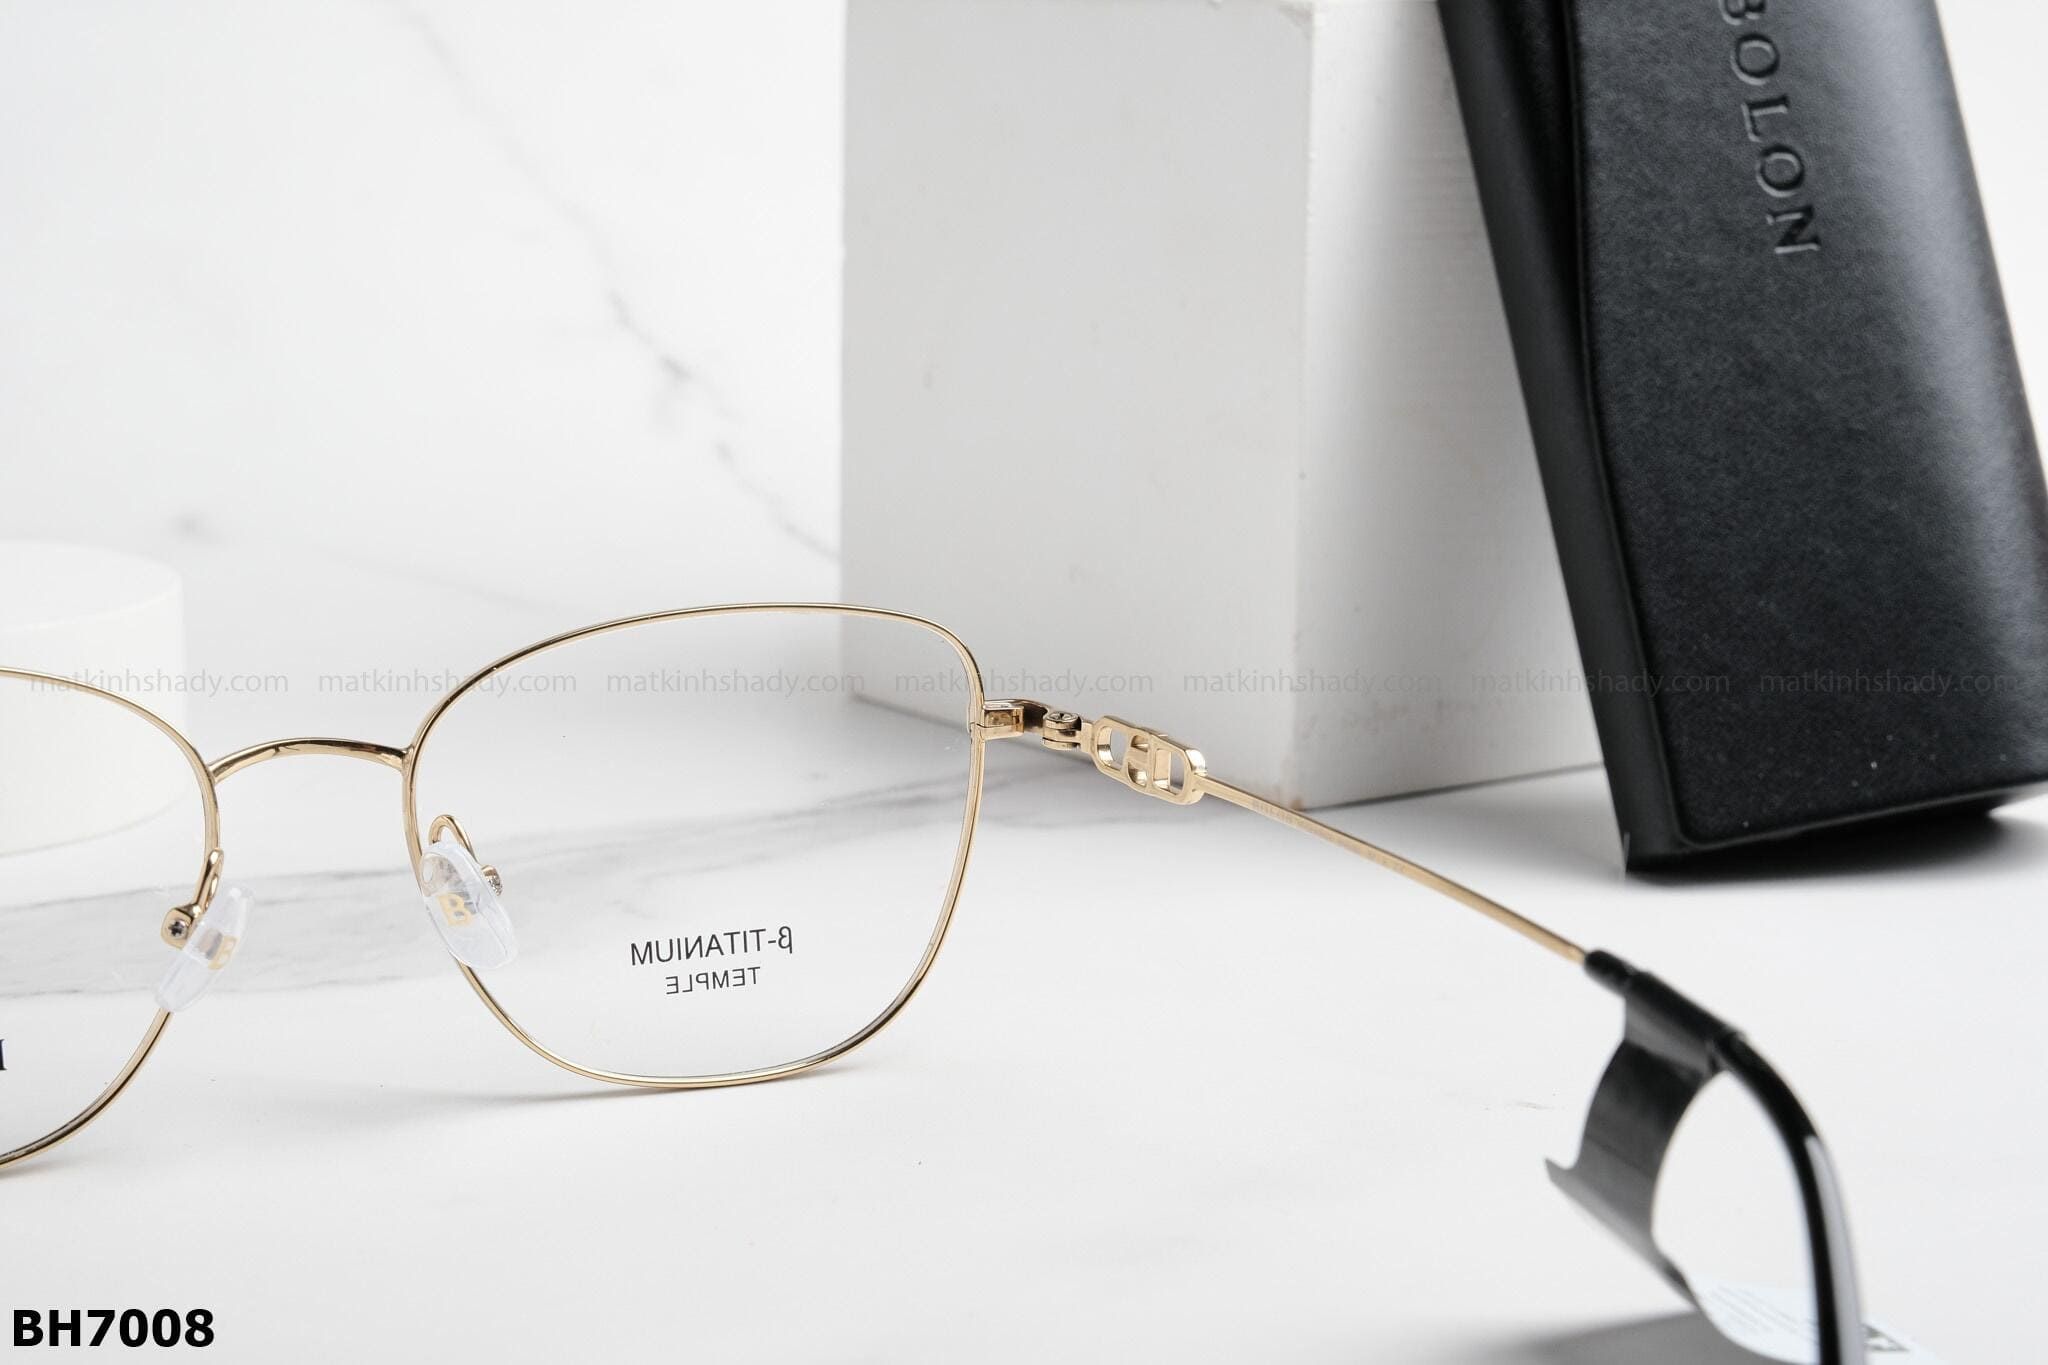  Bolon Eyewear - Glasses - BH7008 